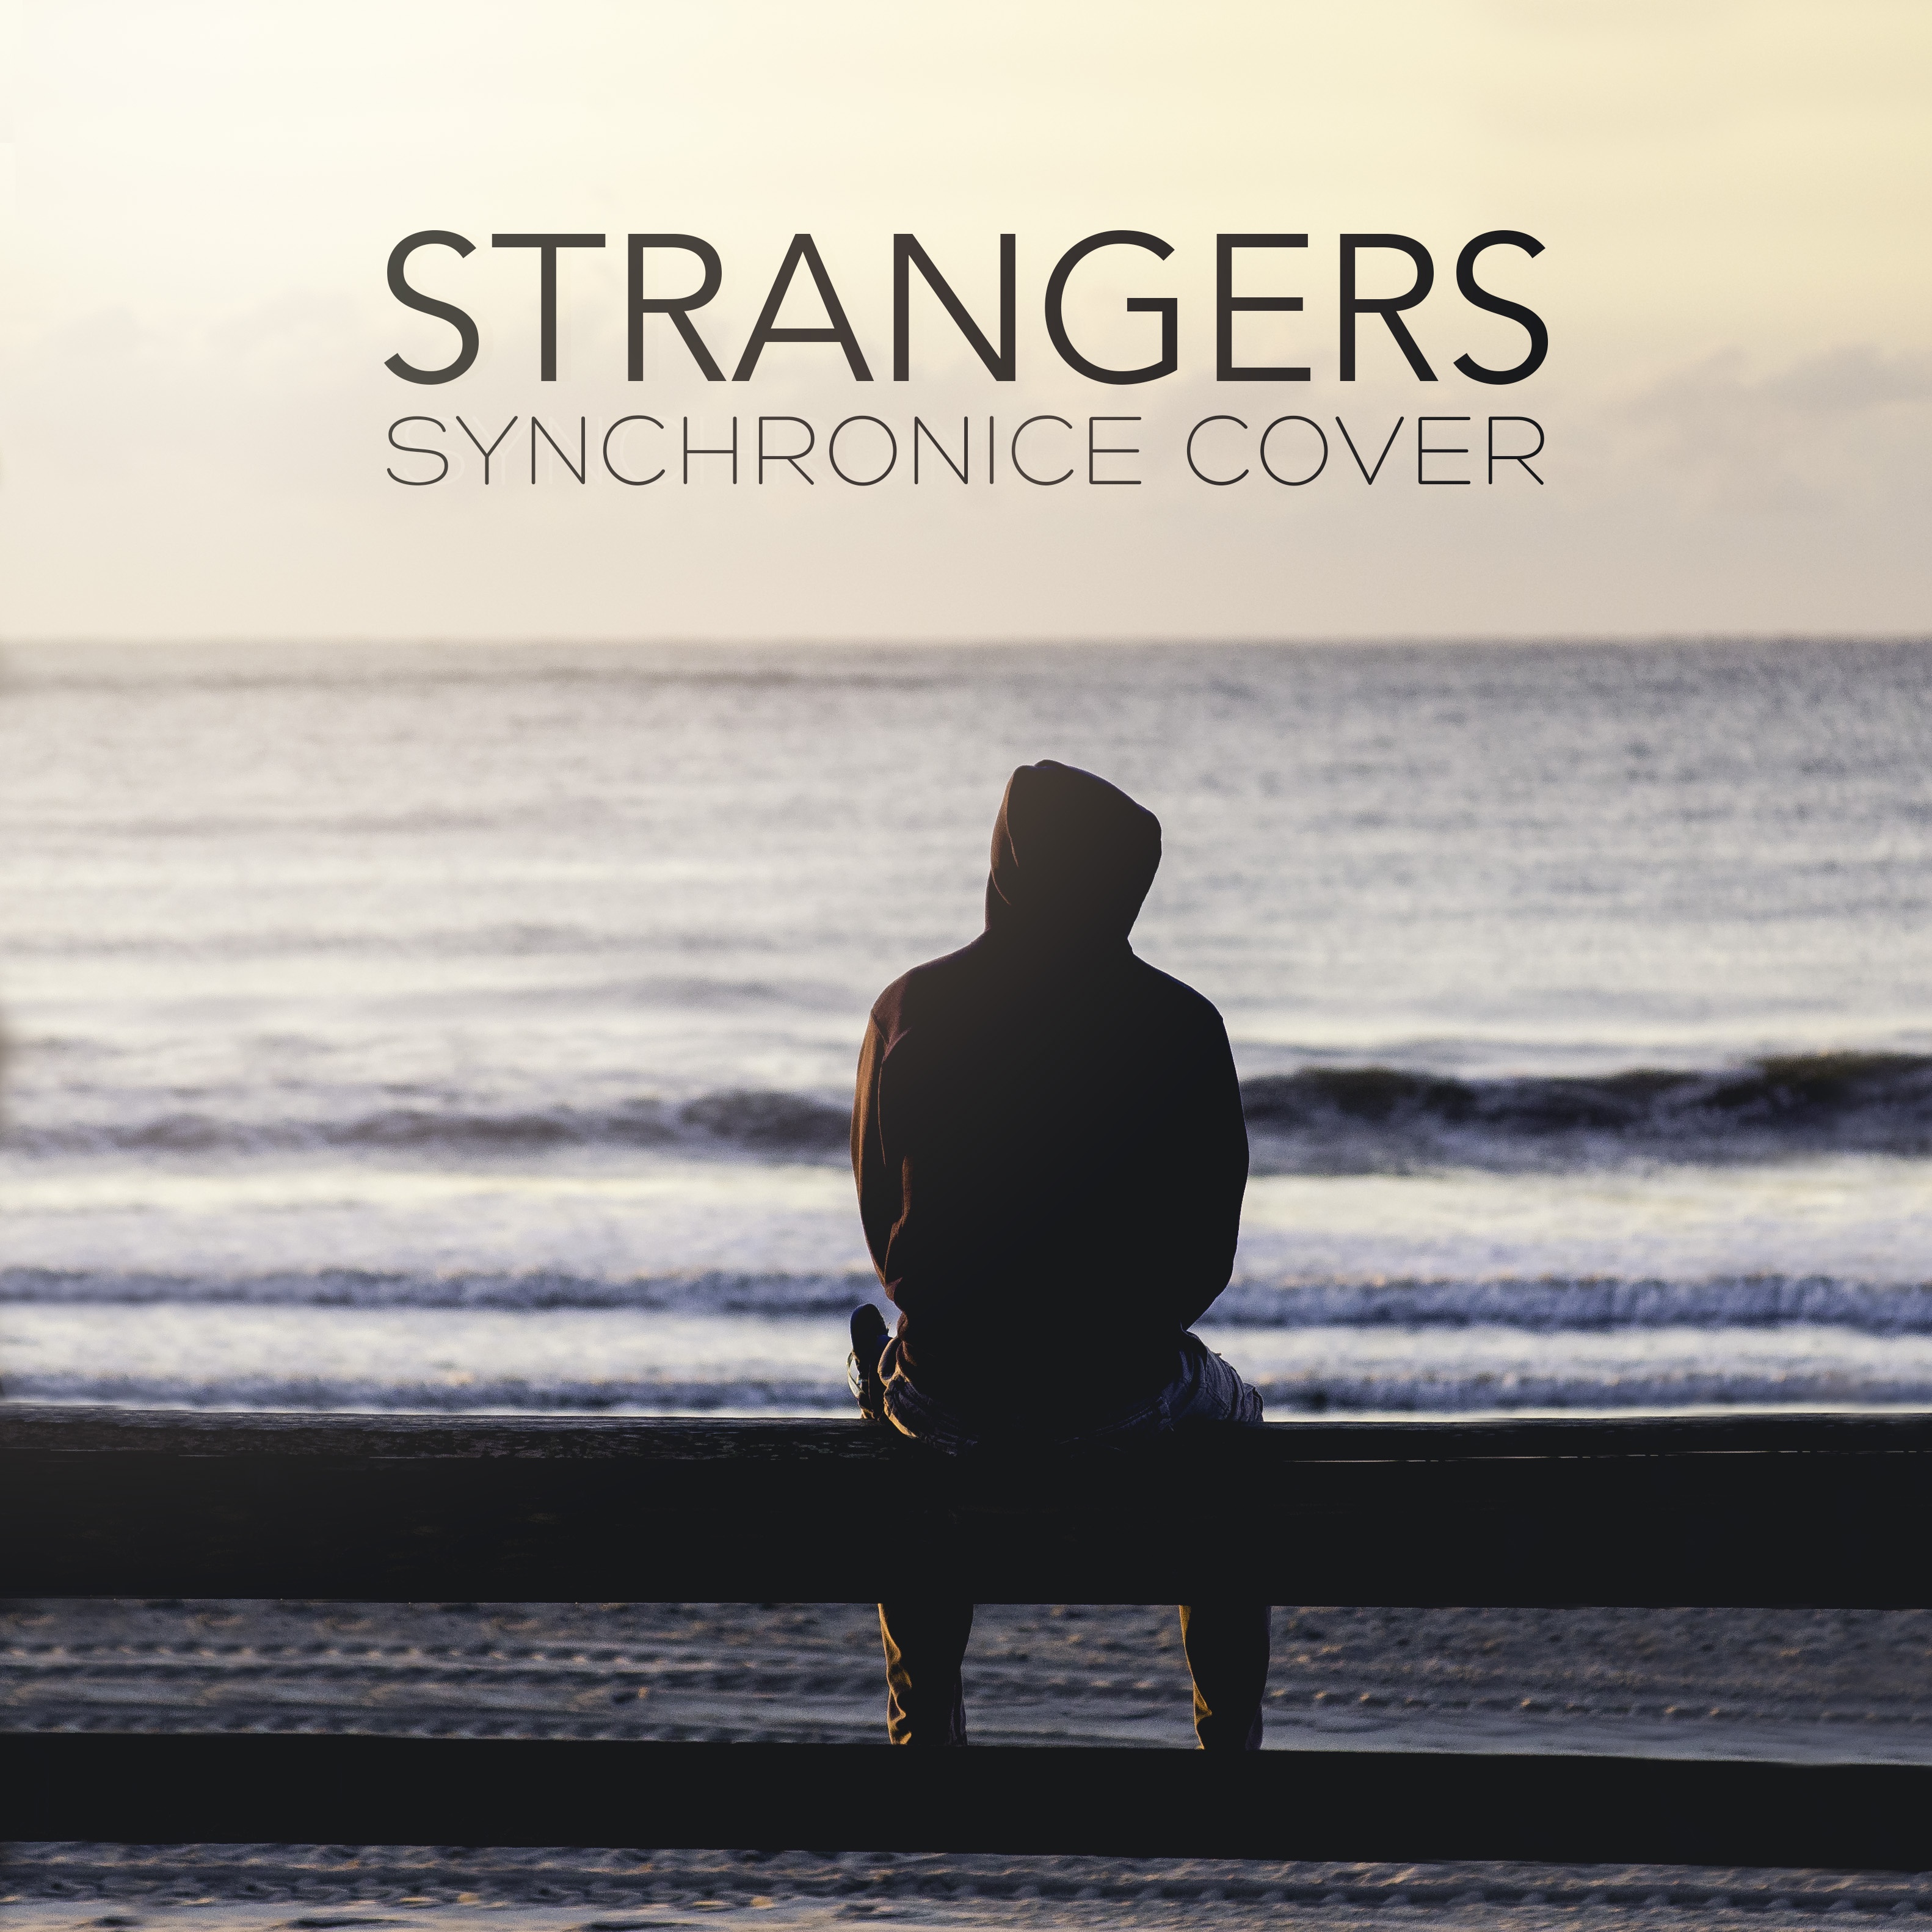 Strangers (Synchronice Cover)